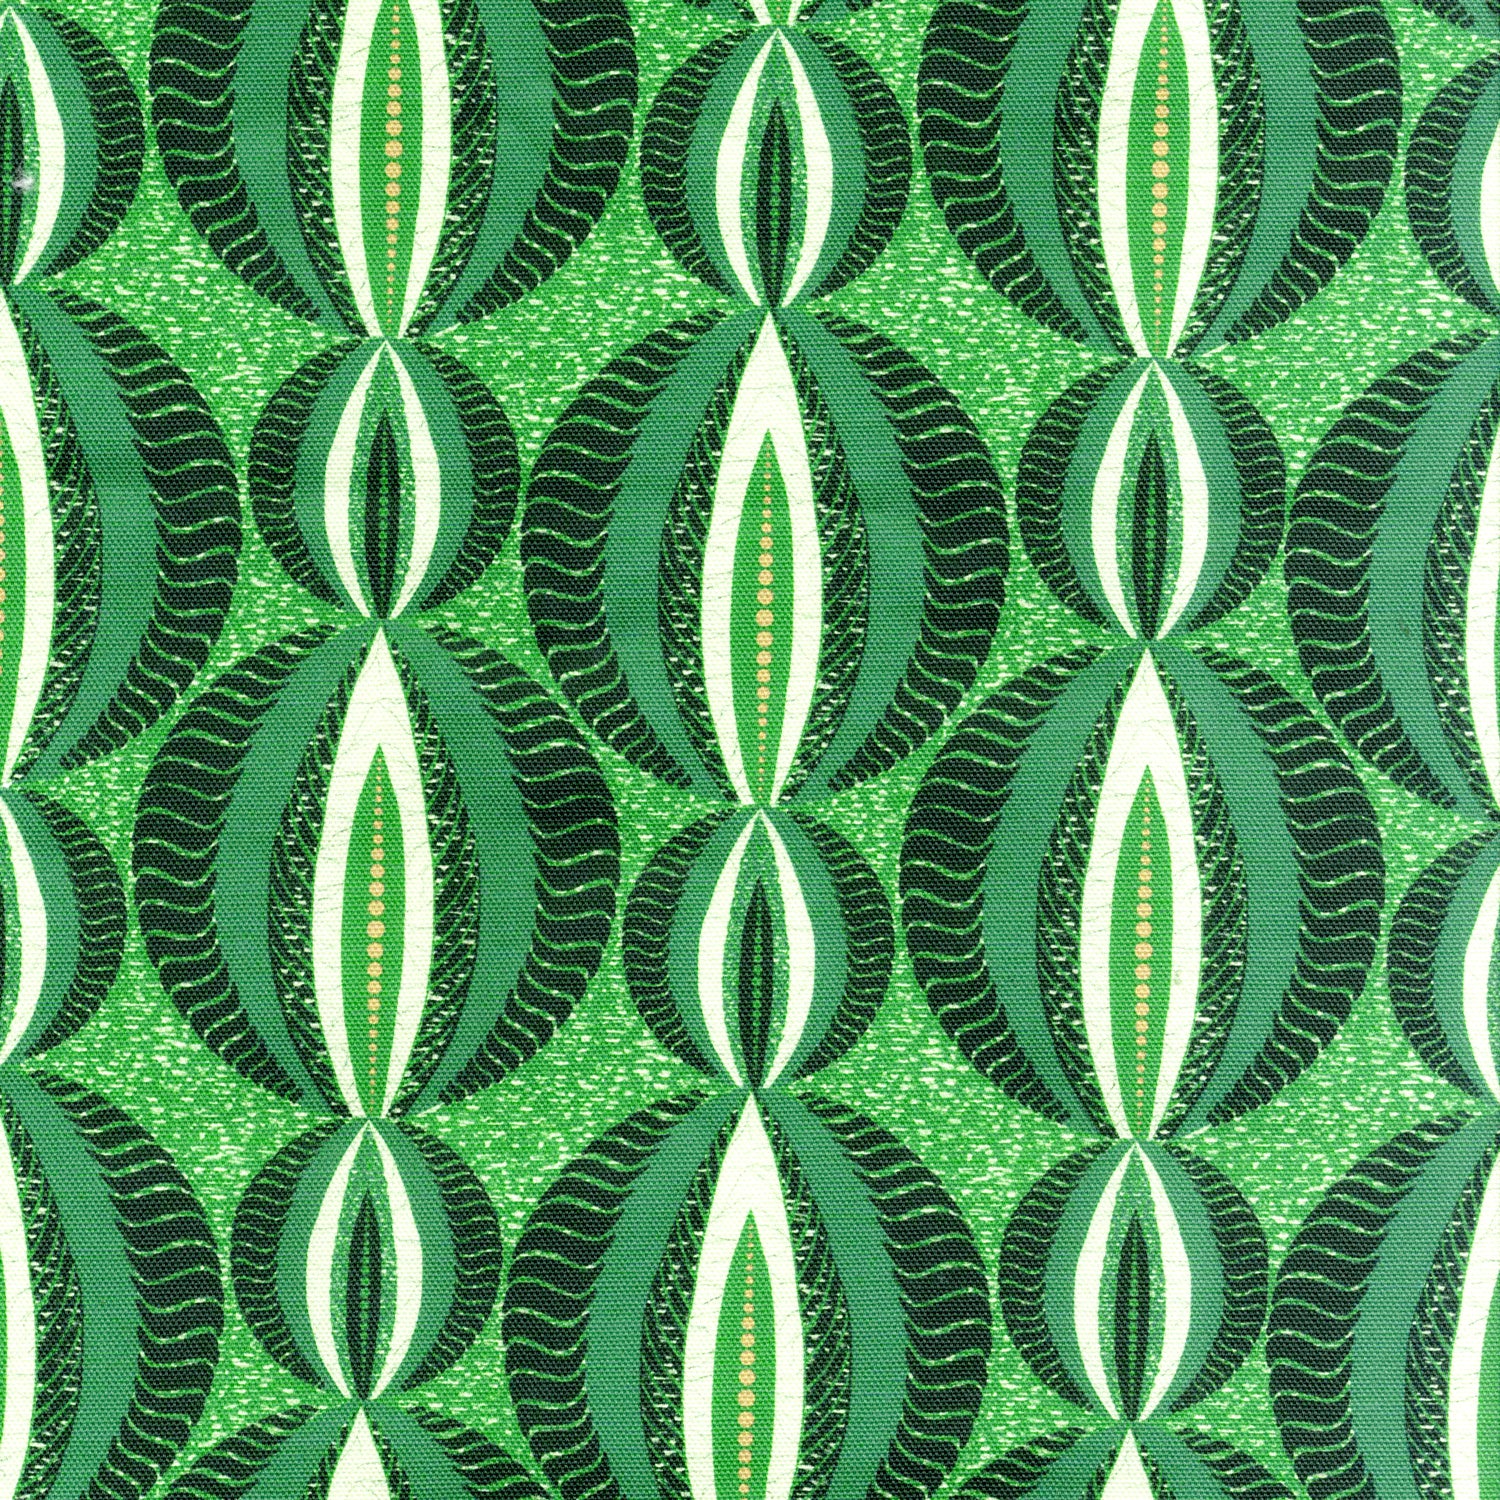 Detail of fabric in an interlocking circular stripe print in shades of green on a dark green field.